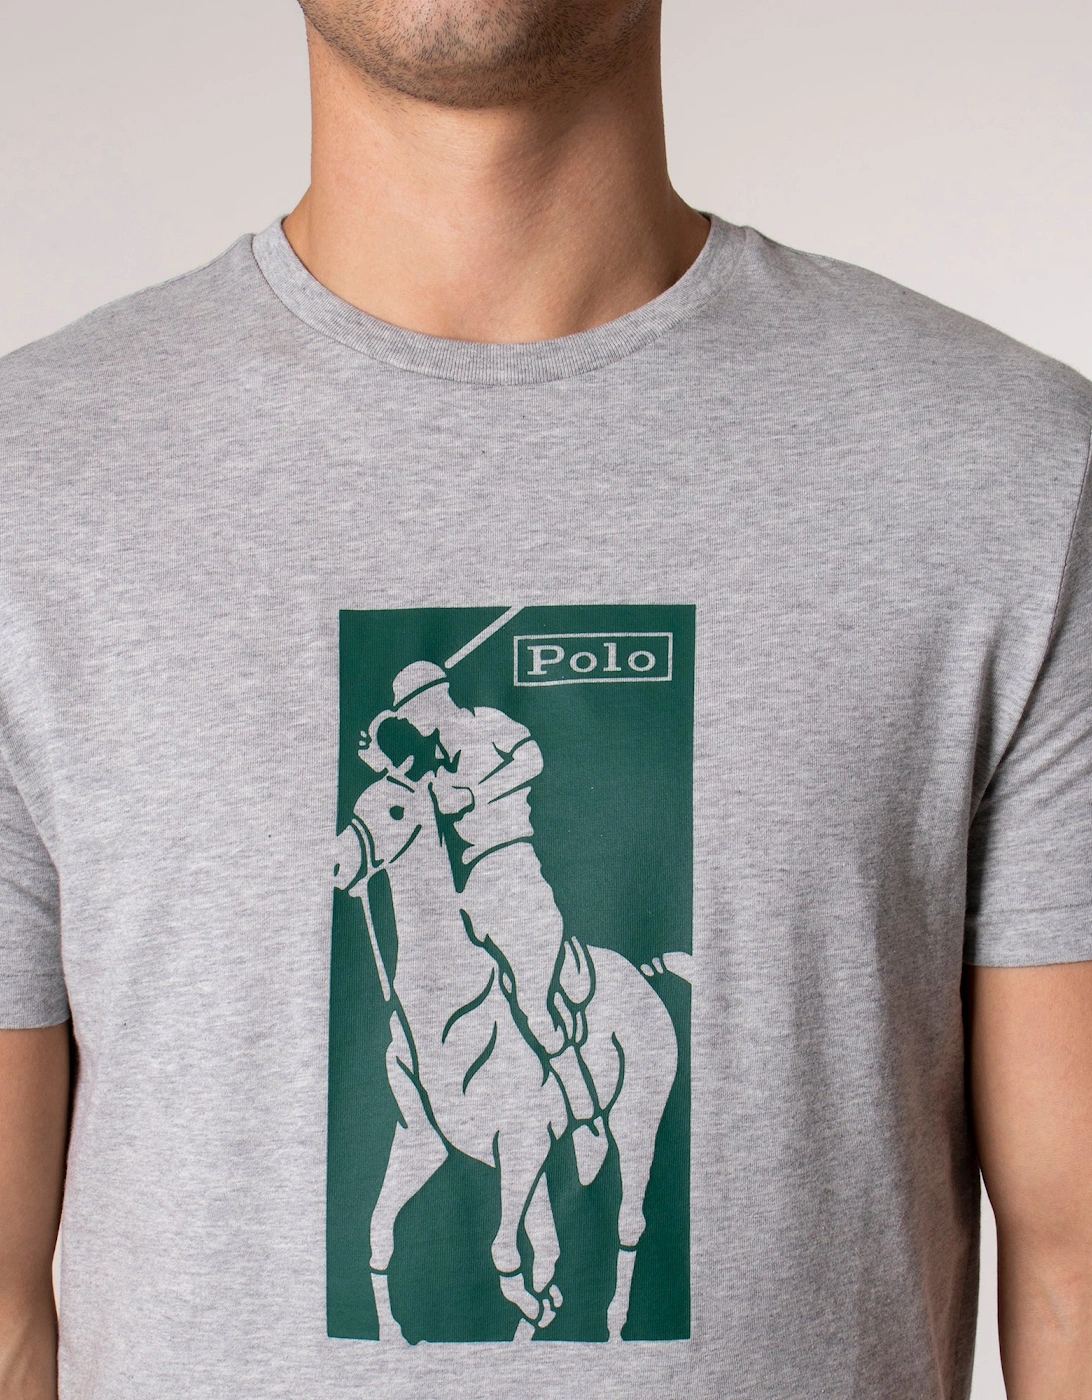 Custom Slim Fit Large Polo Player Logo T-Shirt